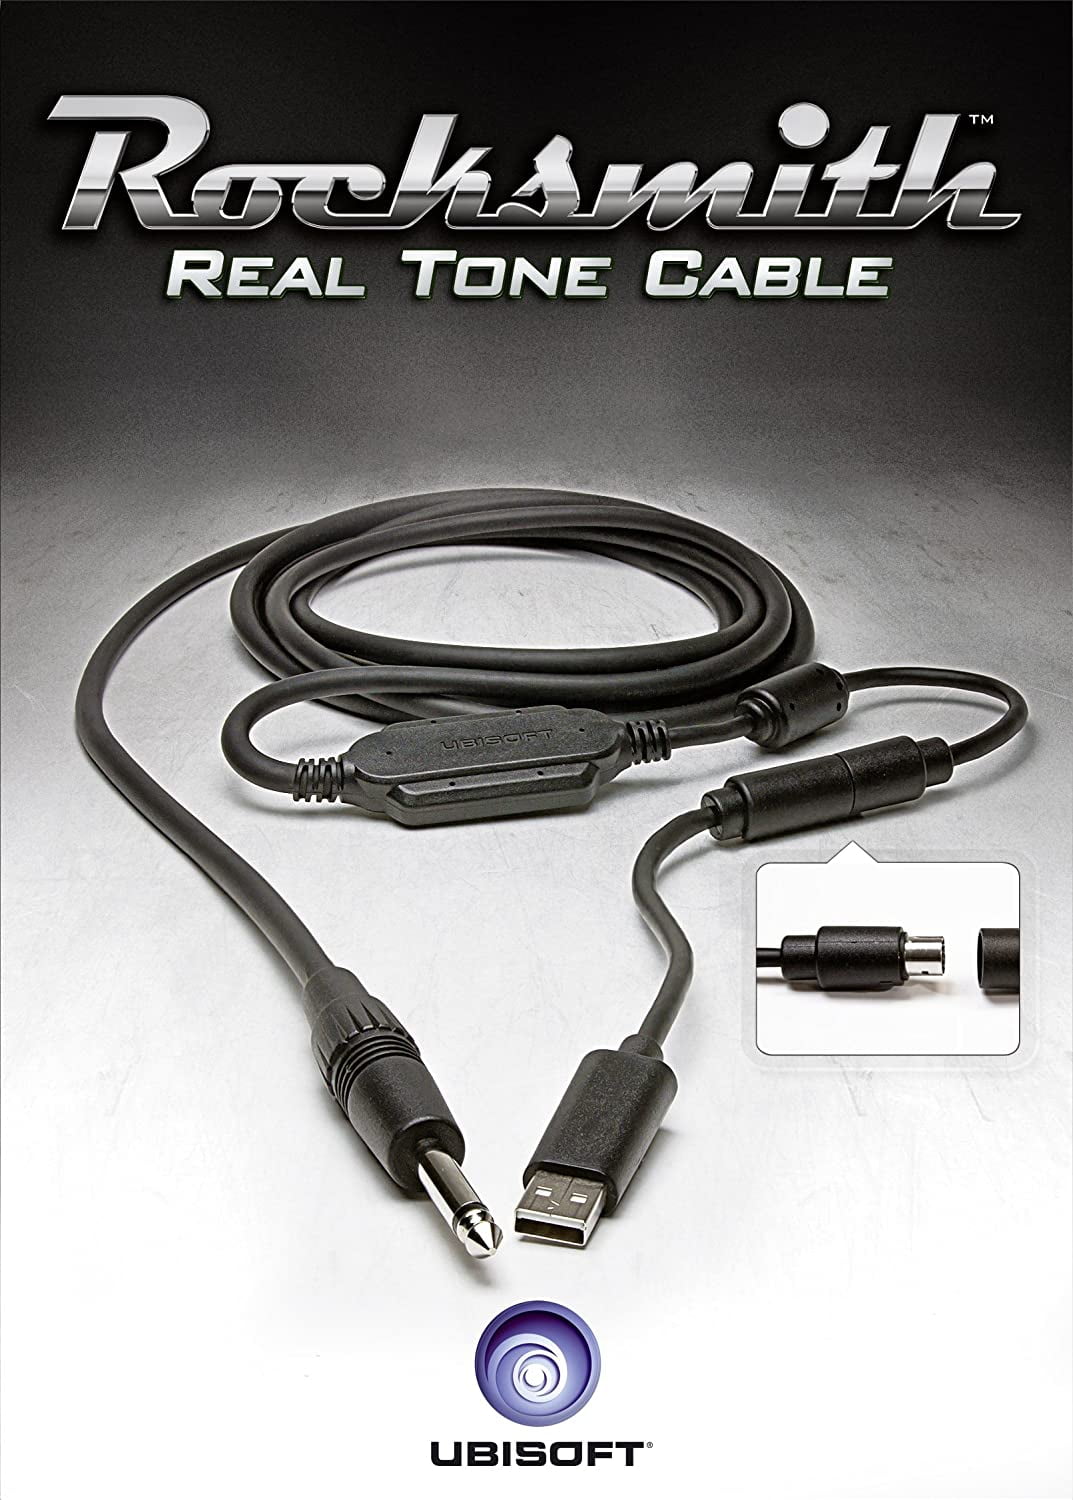 walmart rocksmith real tone cable